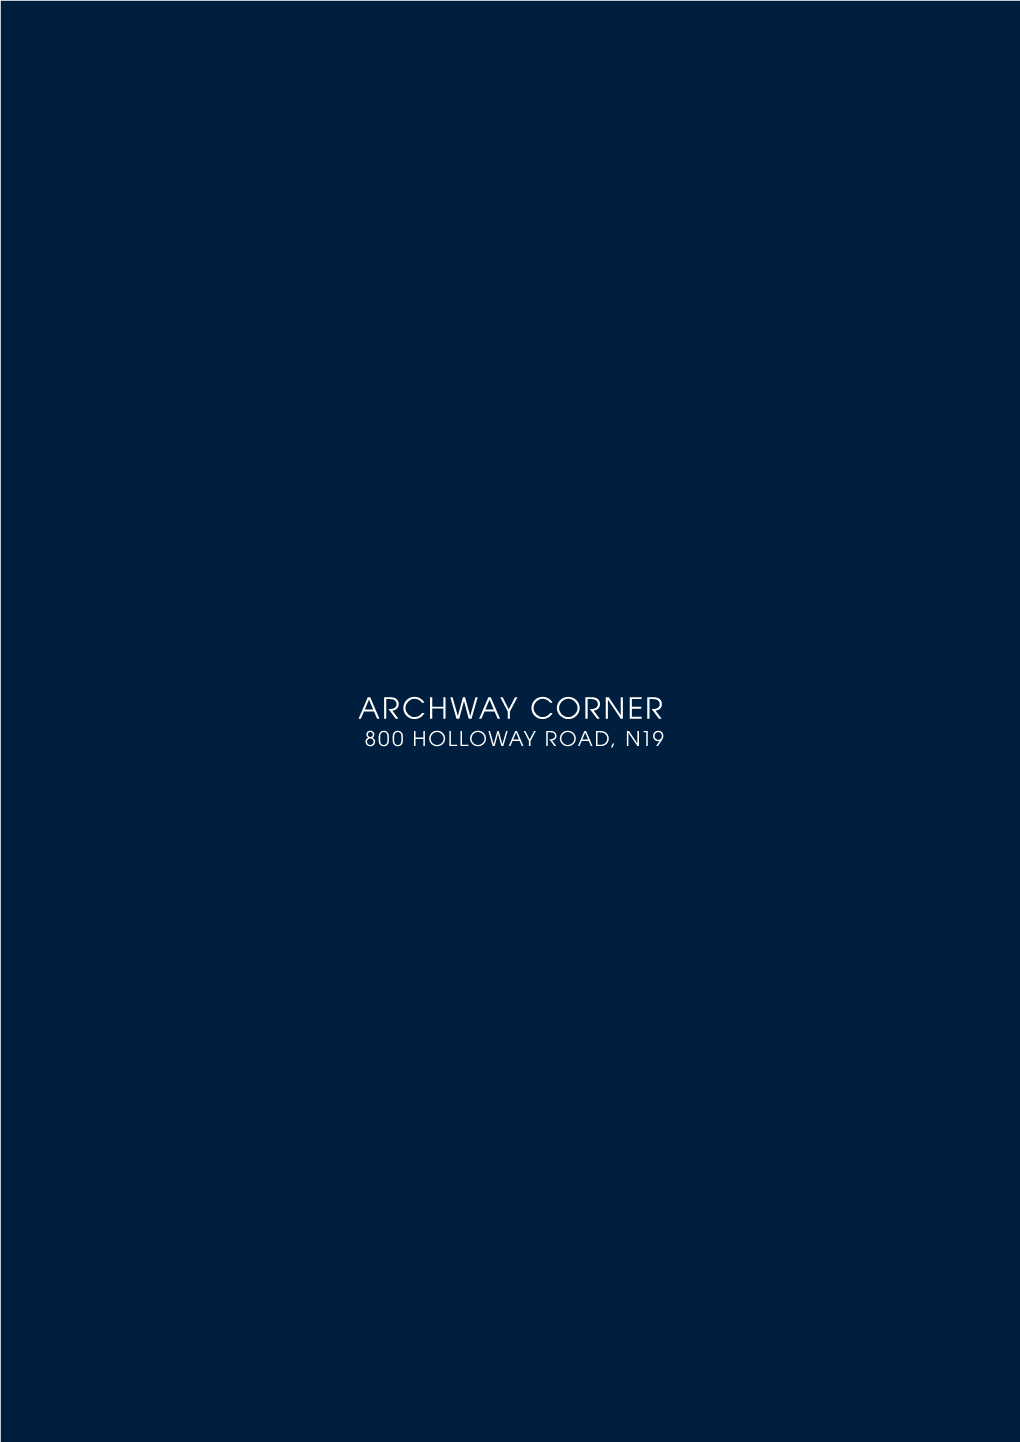 Archway Corner 800 Holloway Road, N19